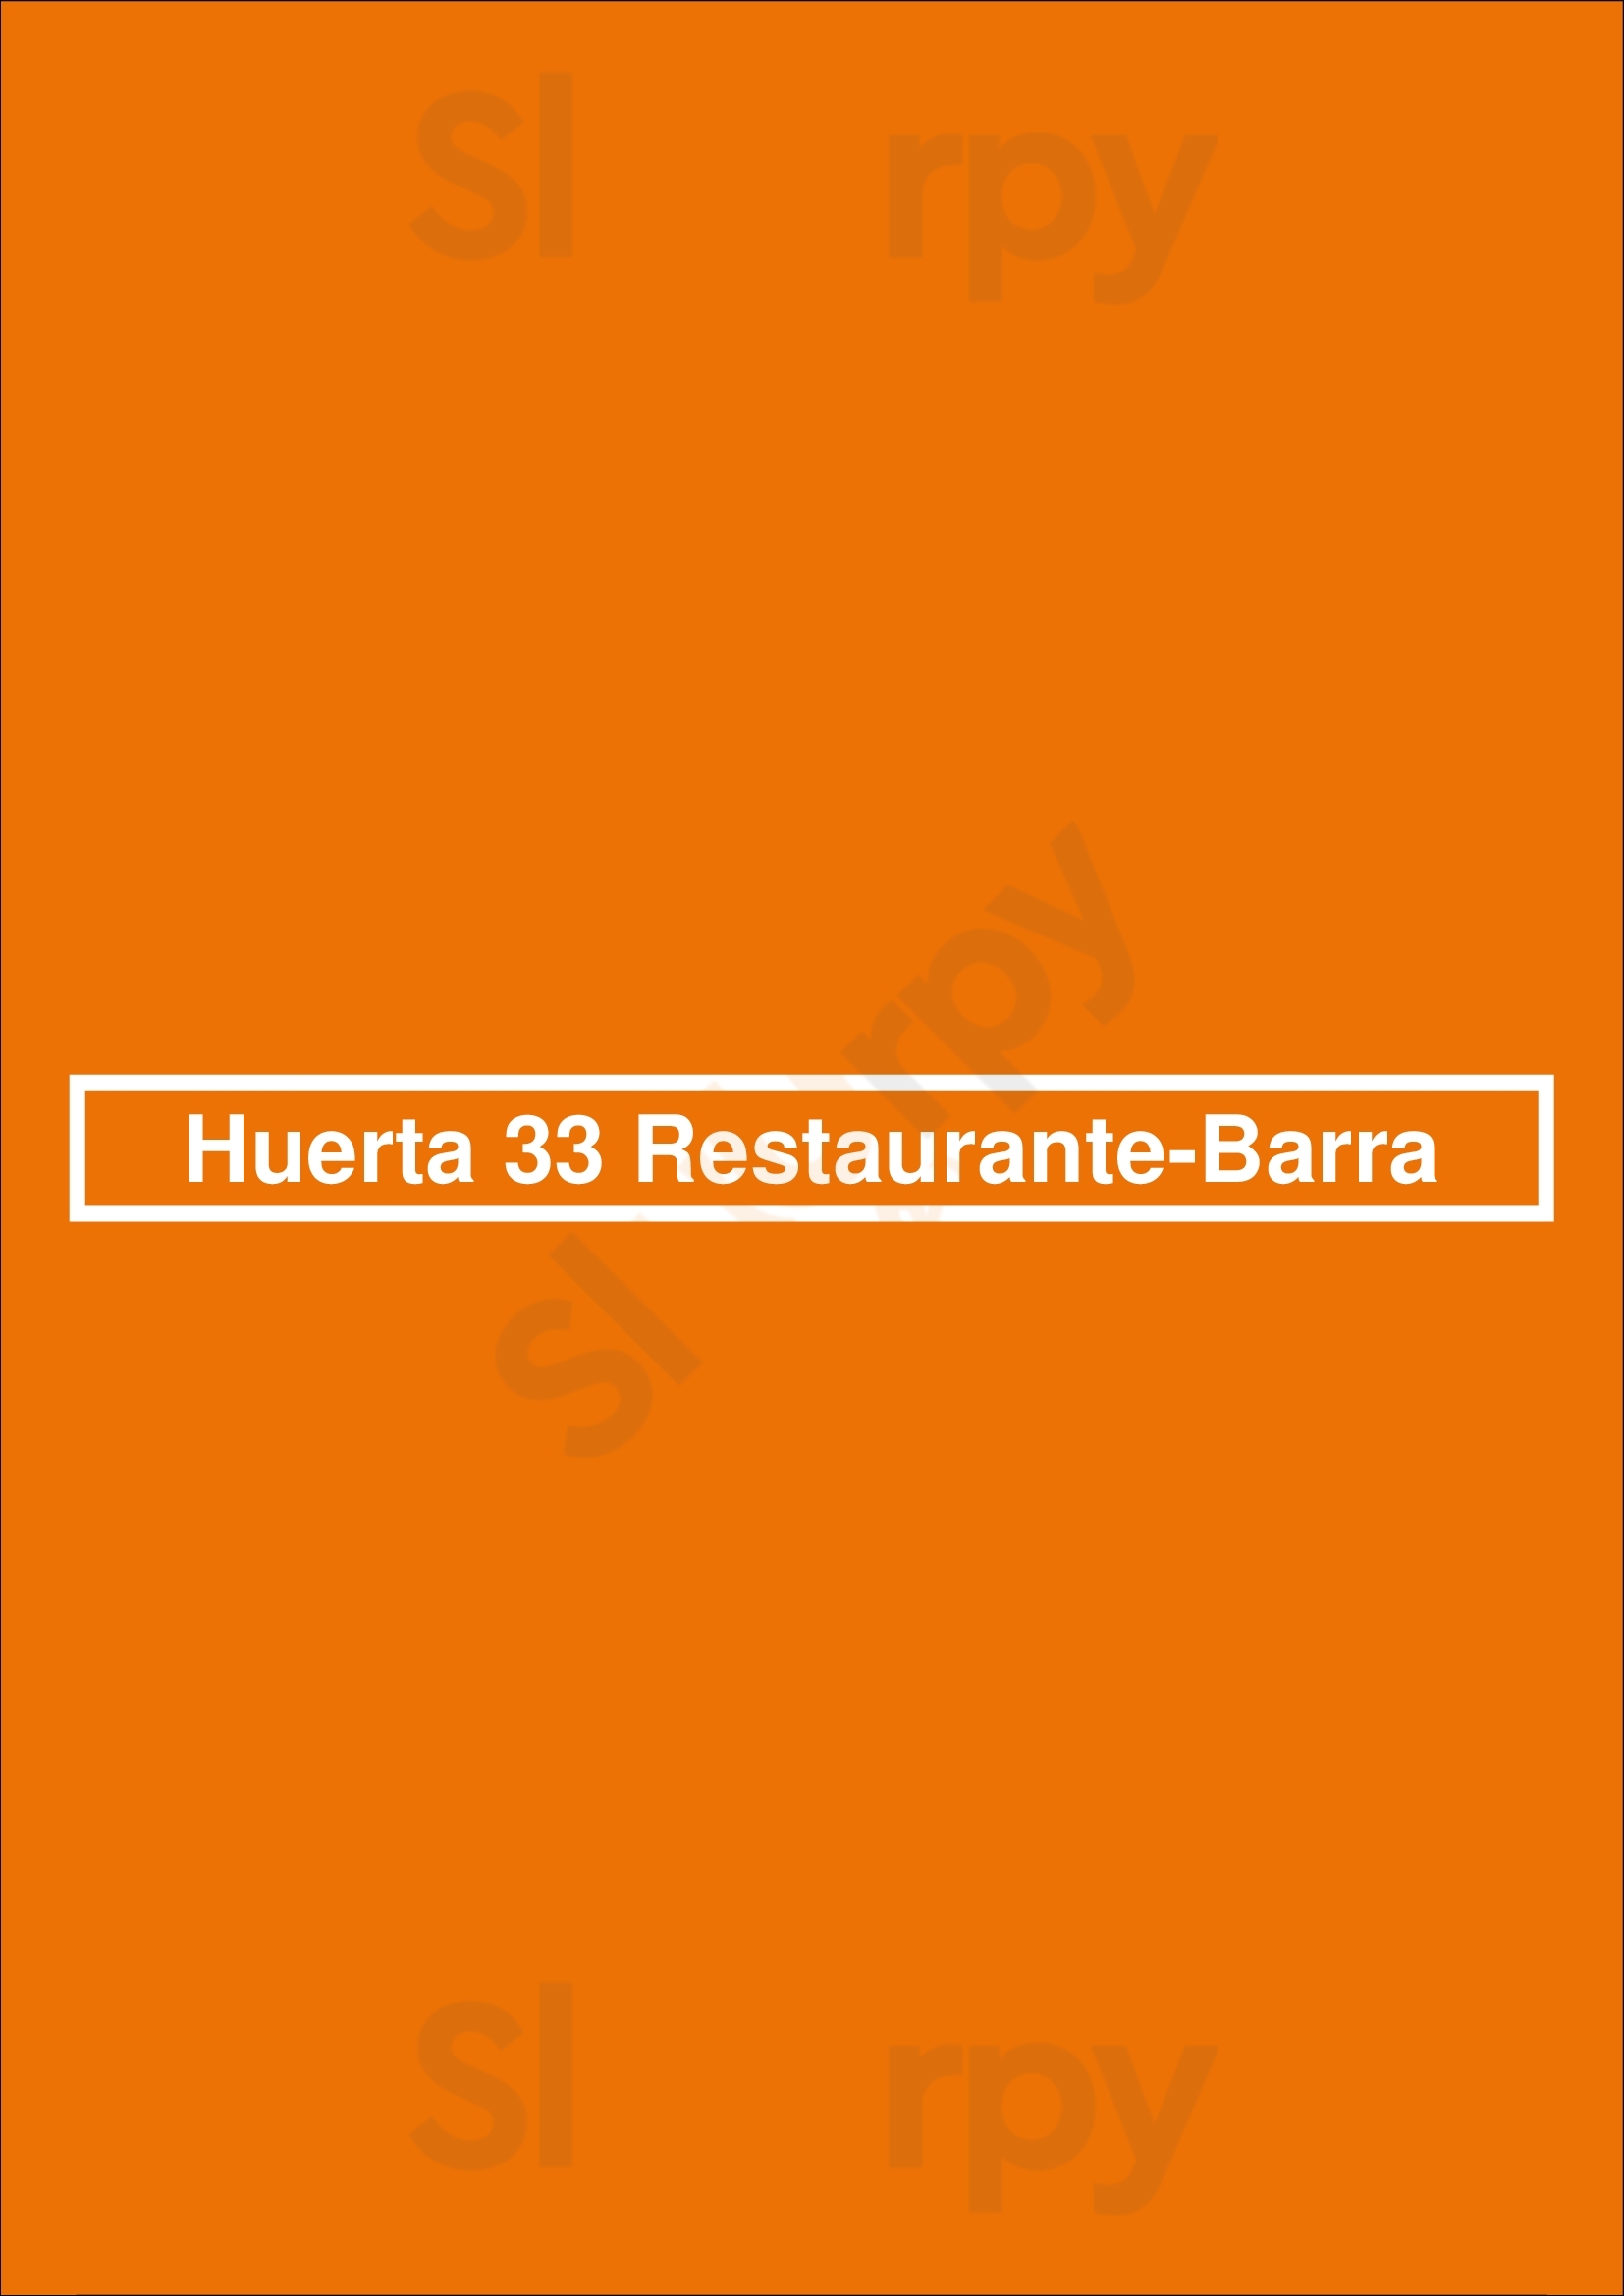 Huerta 33 Restaurante-barra Moralzarzal Menu - 1